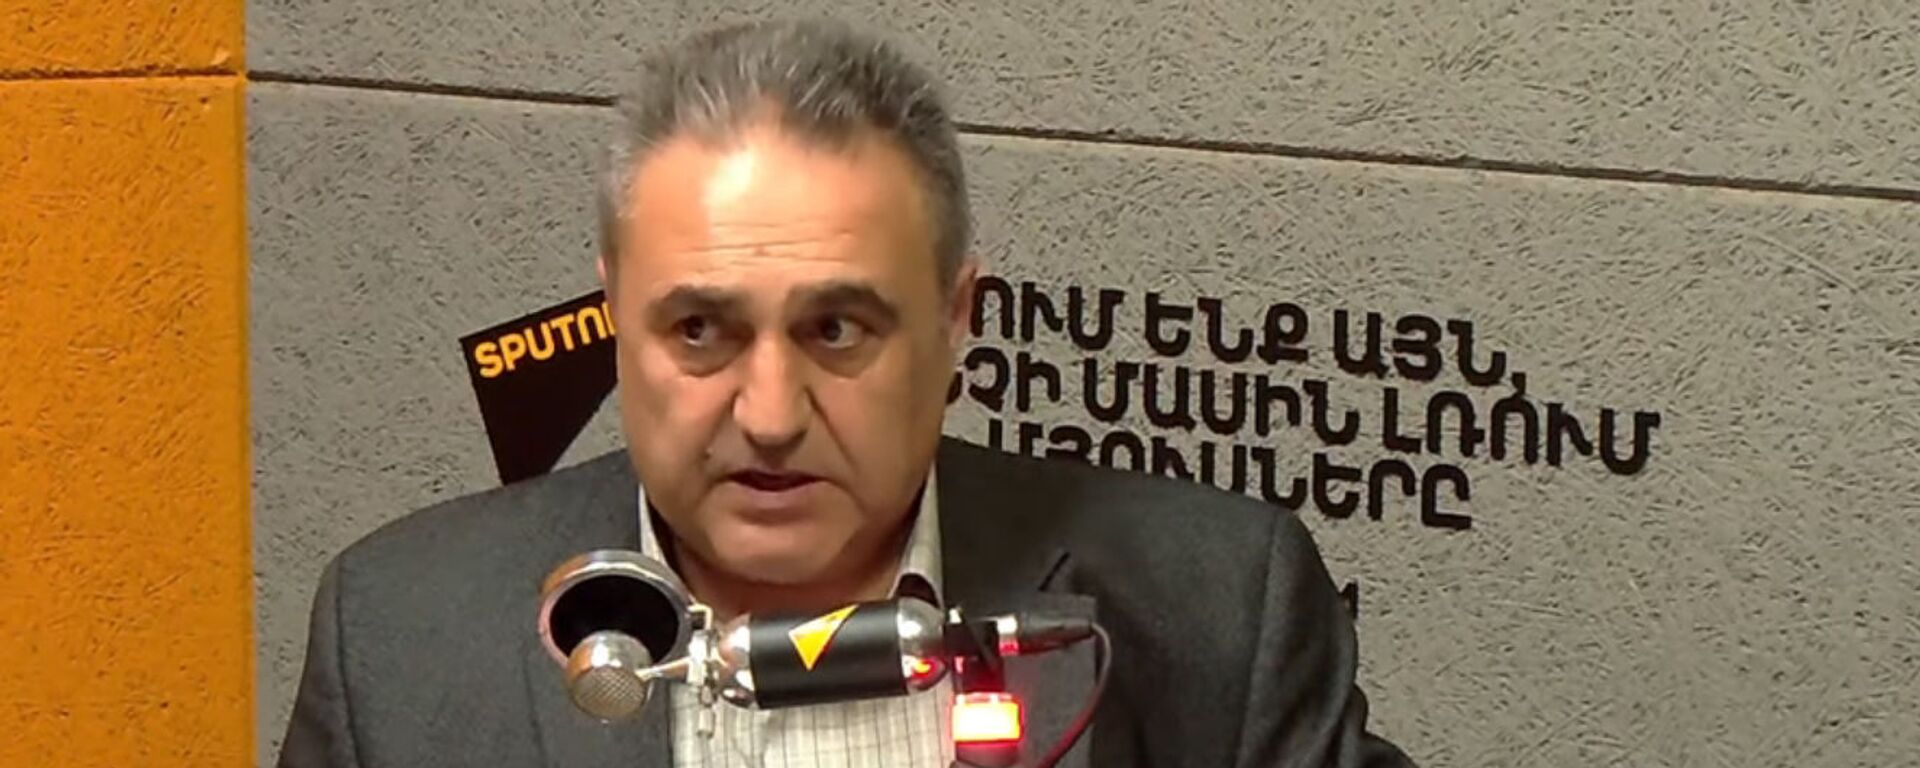 Политолог Армен Багдасарян в гостях радио Sputnik Армения - Sputnik Արմենիա, 1920, 09.06.2021